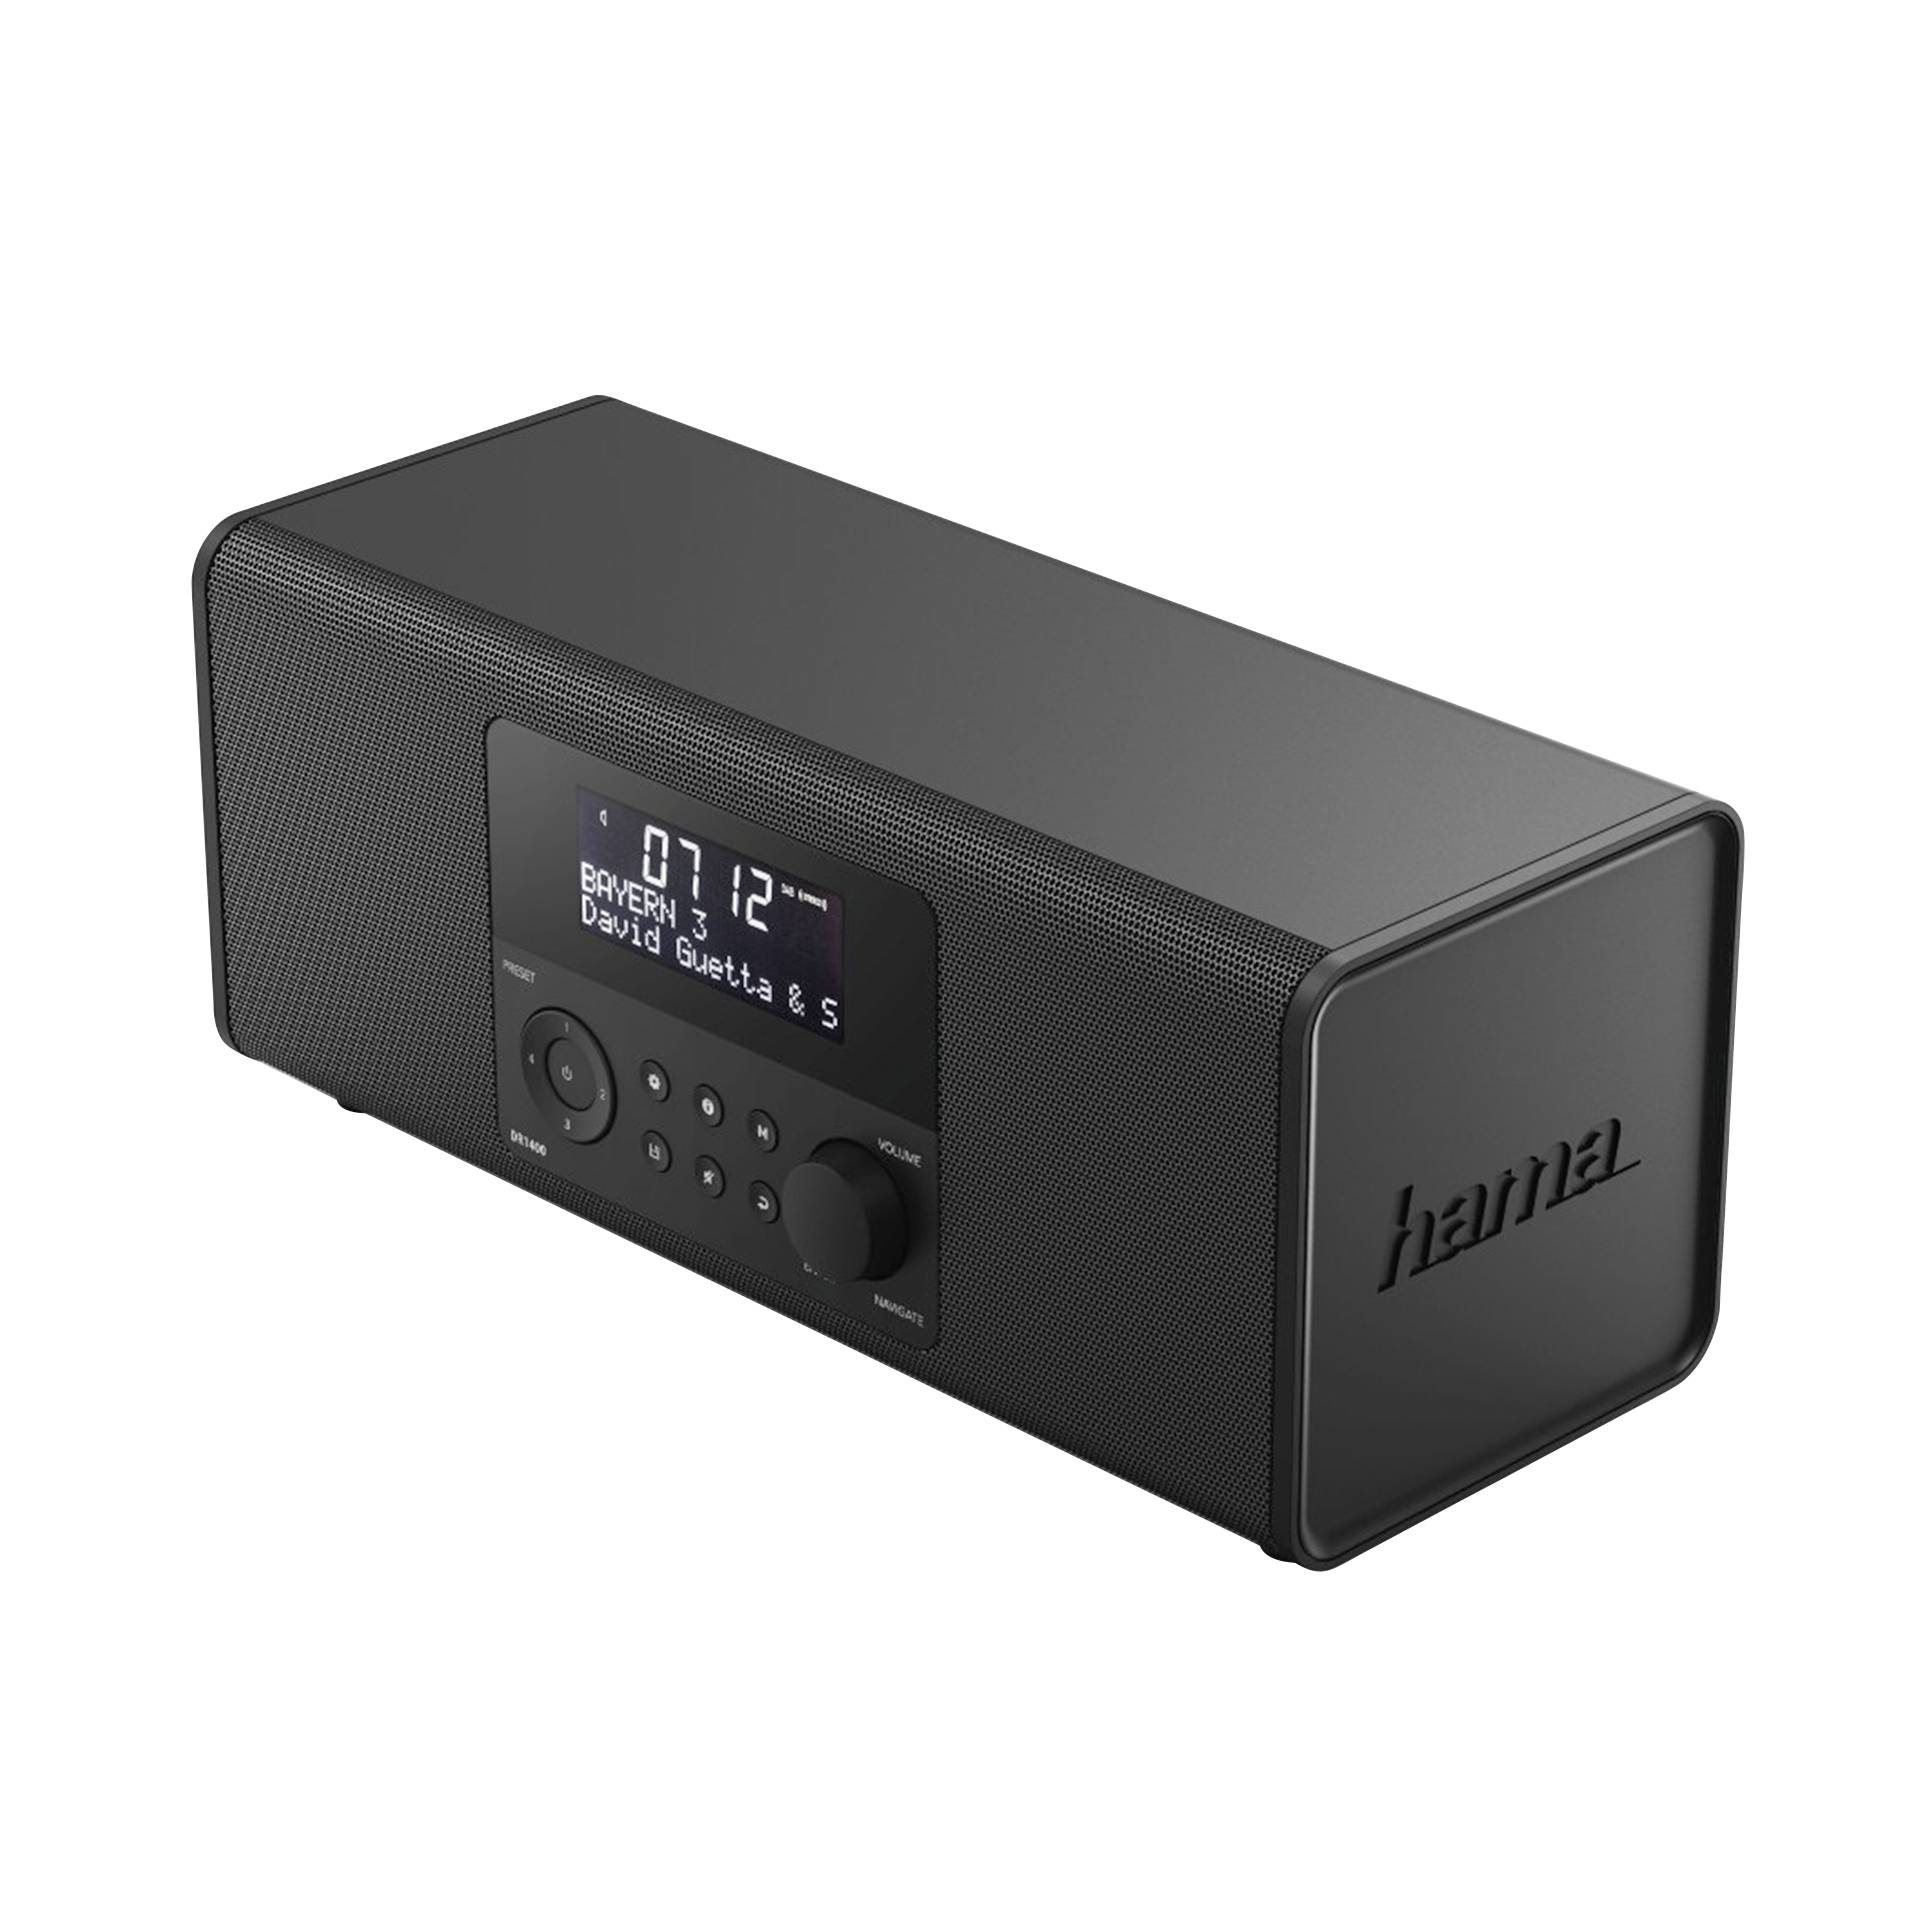 Hama -Digitalradio DR1400 FM / -Hama / Hardware/Electronic DAB DAB